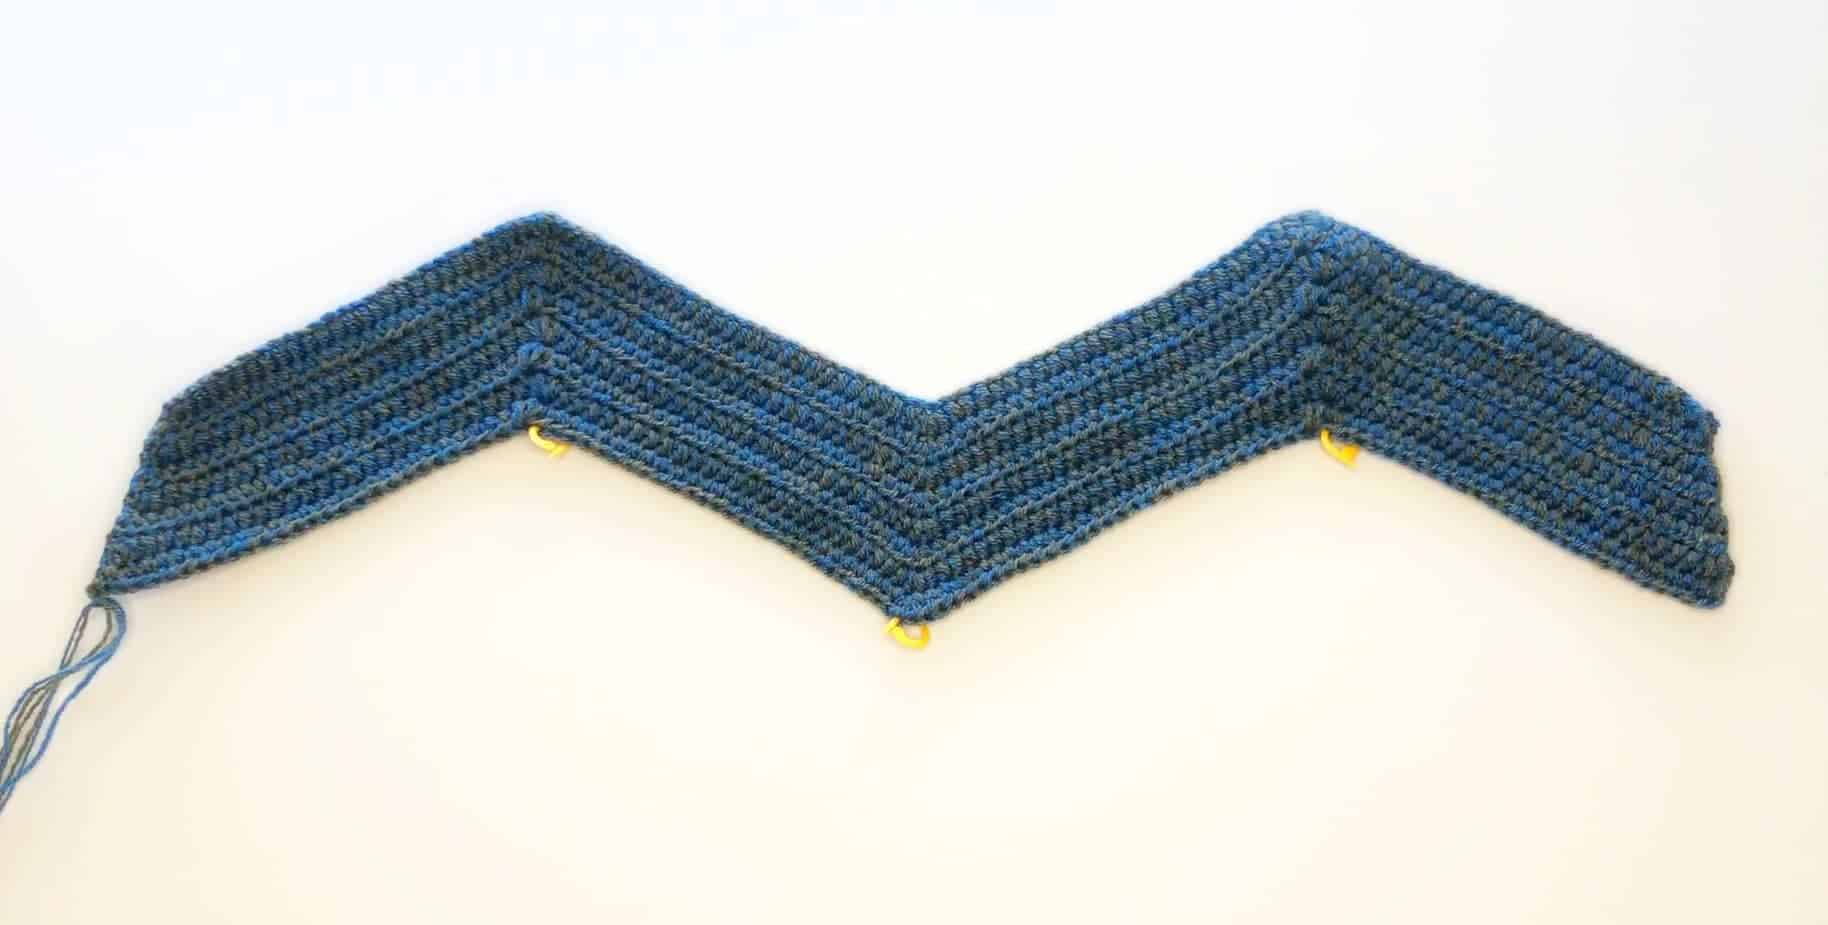 chevron denim tank top crochet pattern